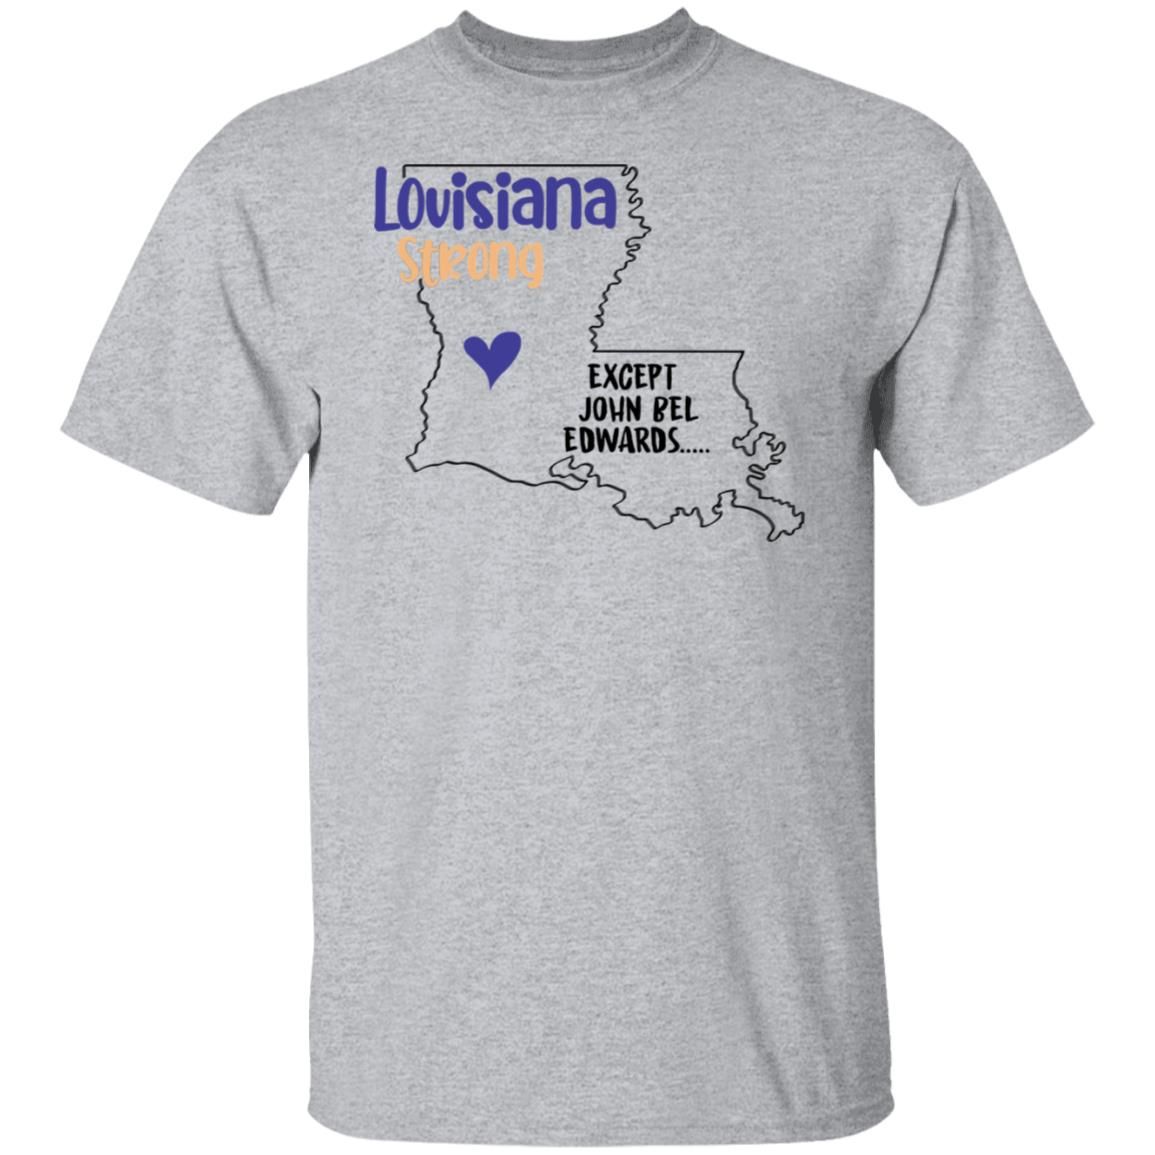 Louisiana strong except John Bel Edwards T-Shirt Style: T-shirt, Color: Sport Grey